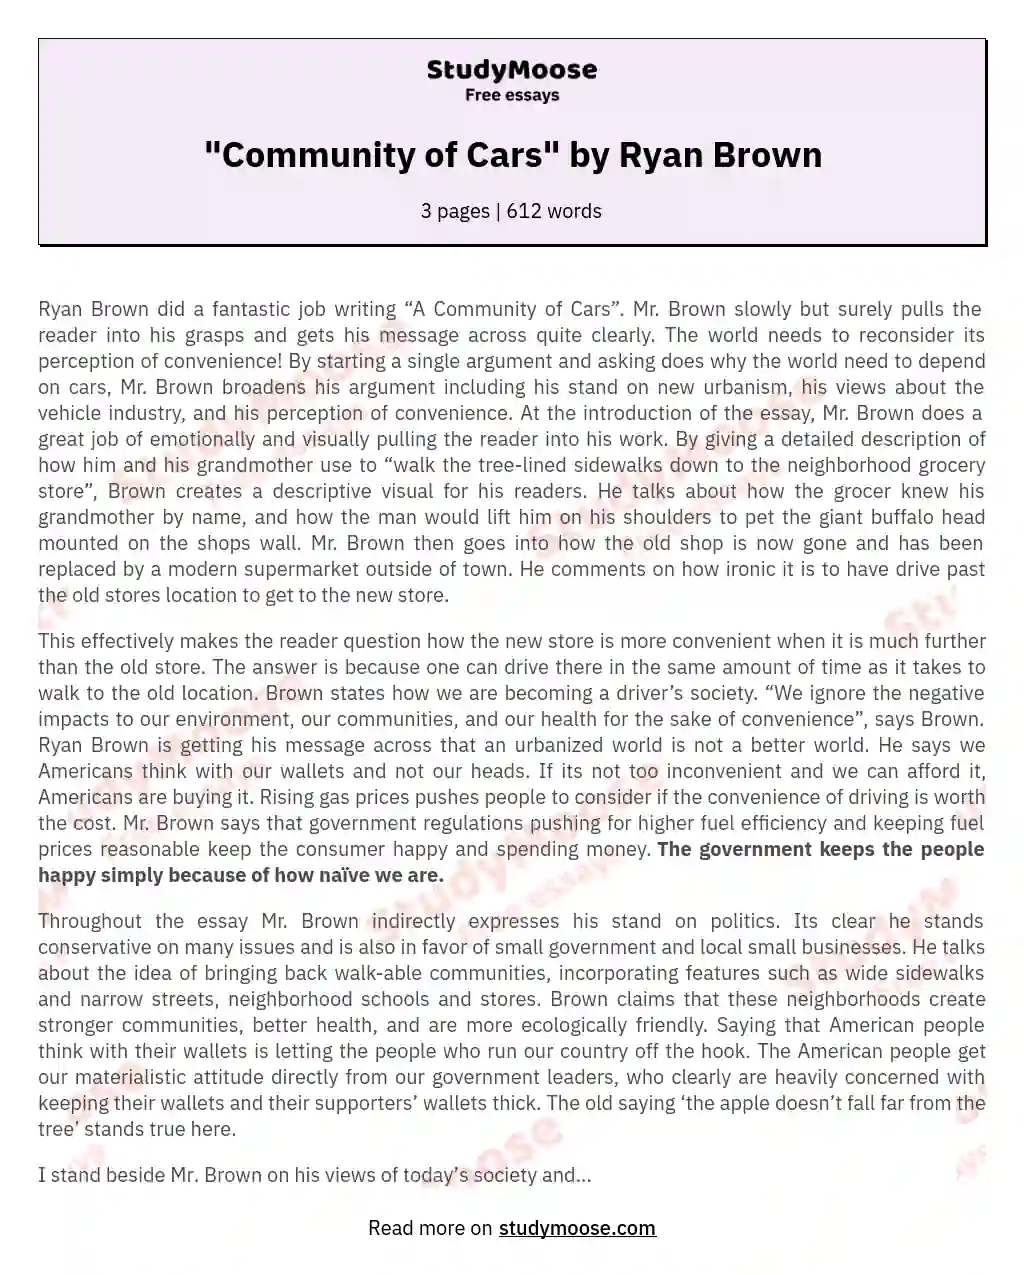 "Community of Cars" by Ryan Brown essay